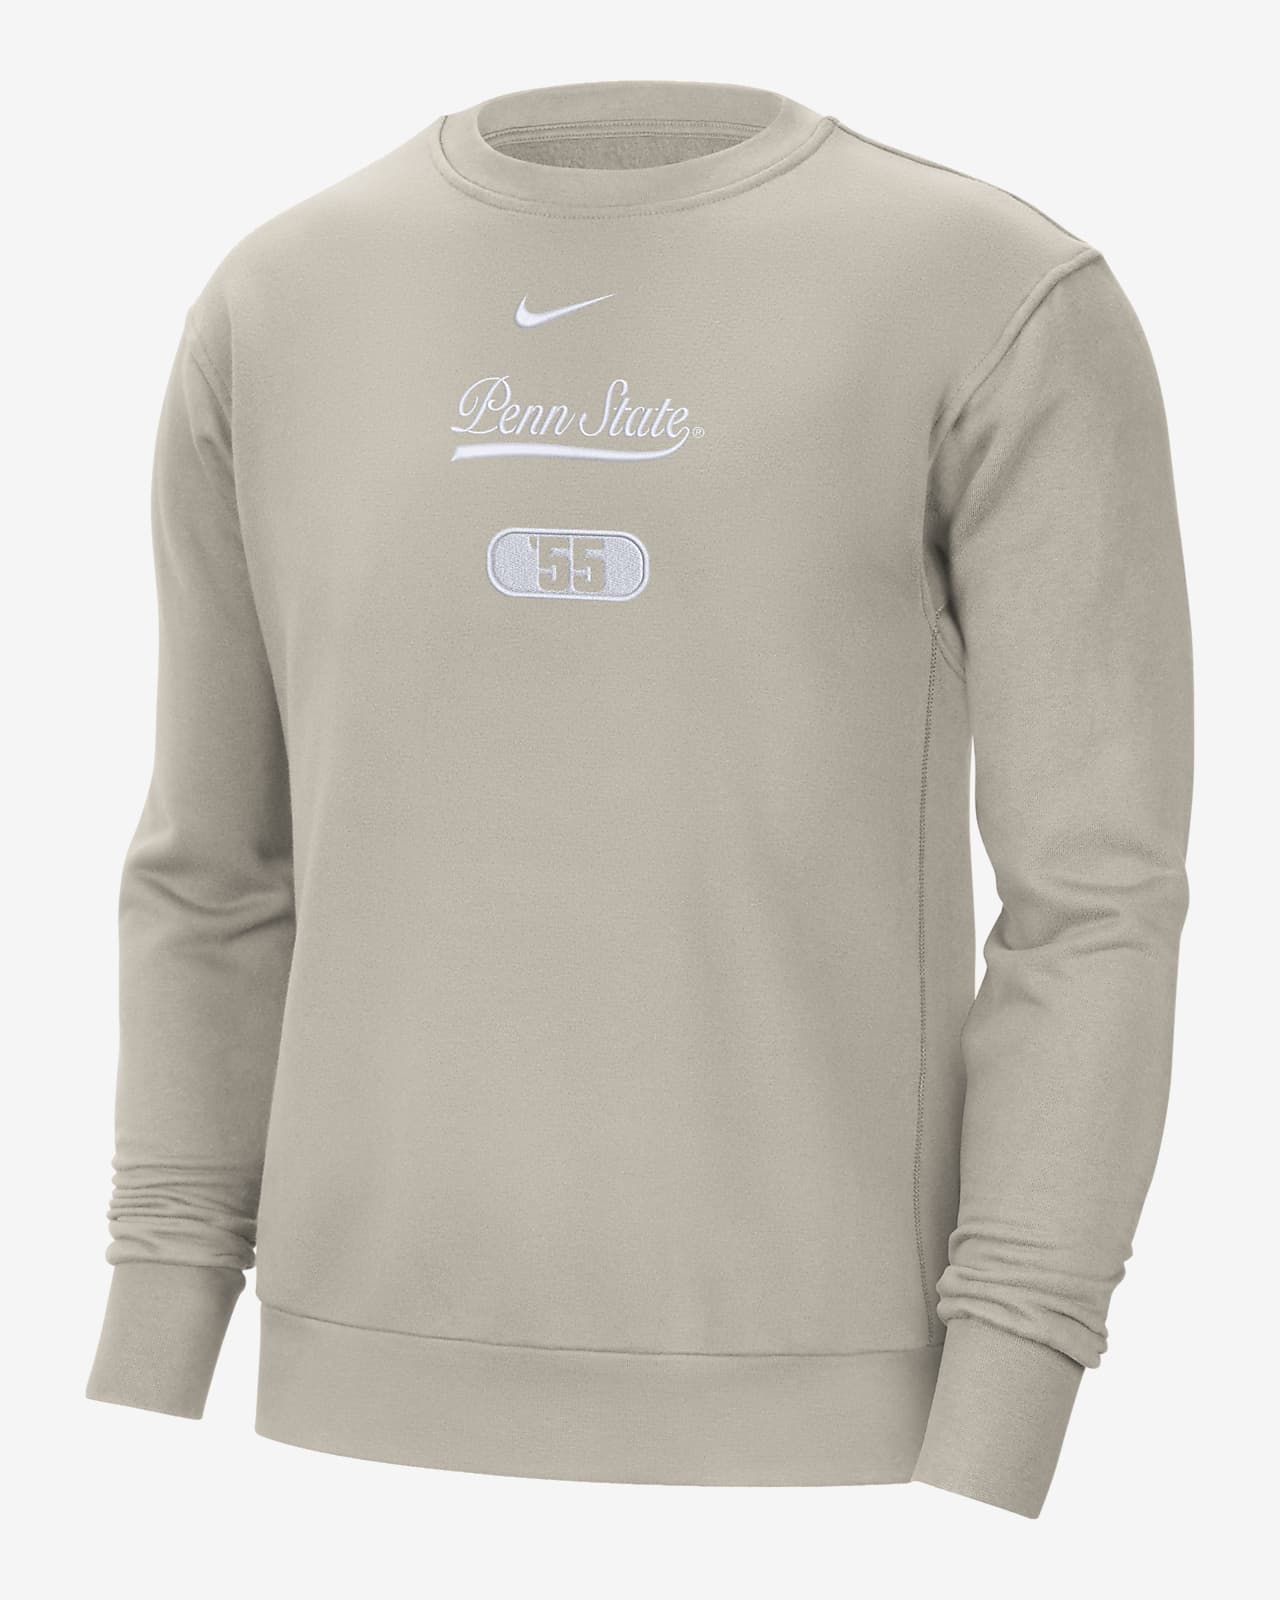 Penn State Men's Nike College Crew-Neck Sweatshirt